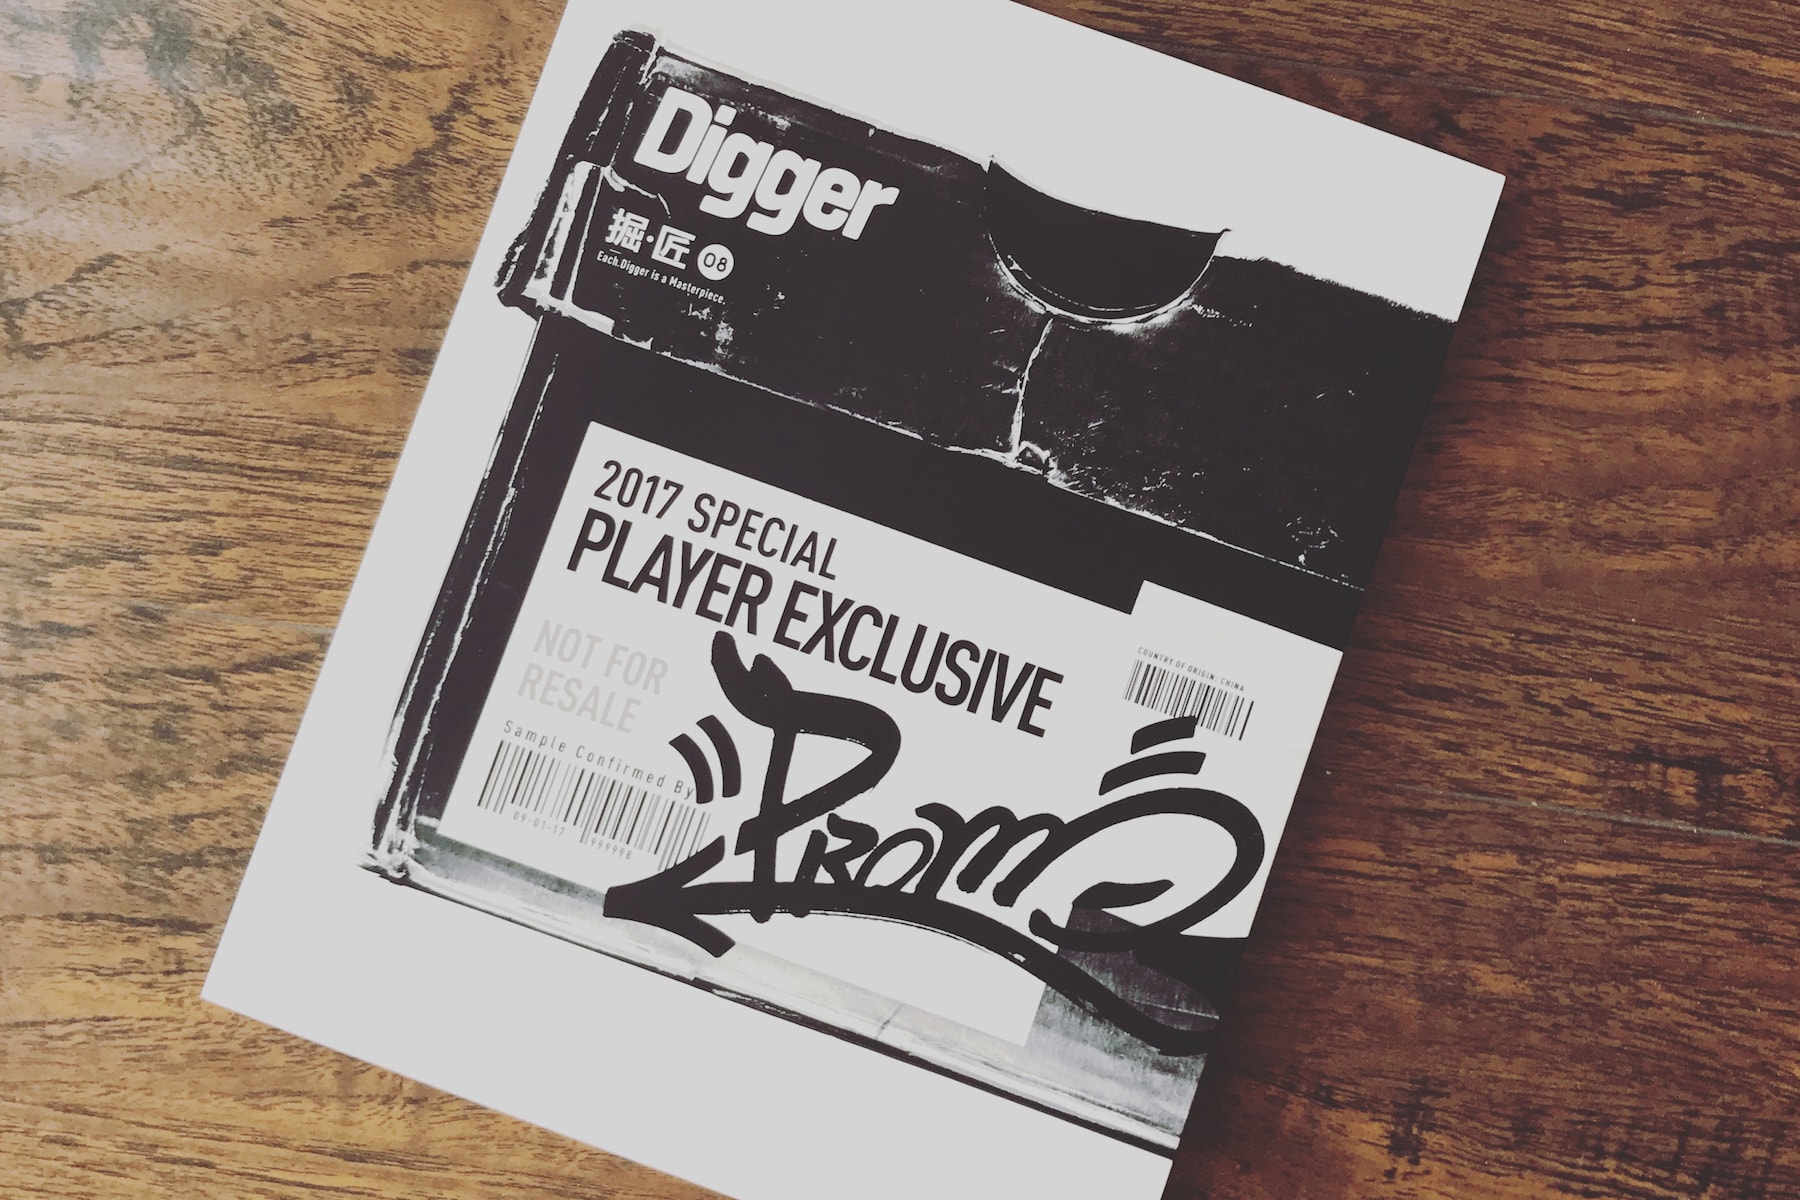 《Digger·Special 2017》球員版 PE 戰靴特刊正式上架